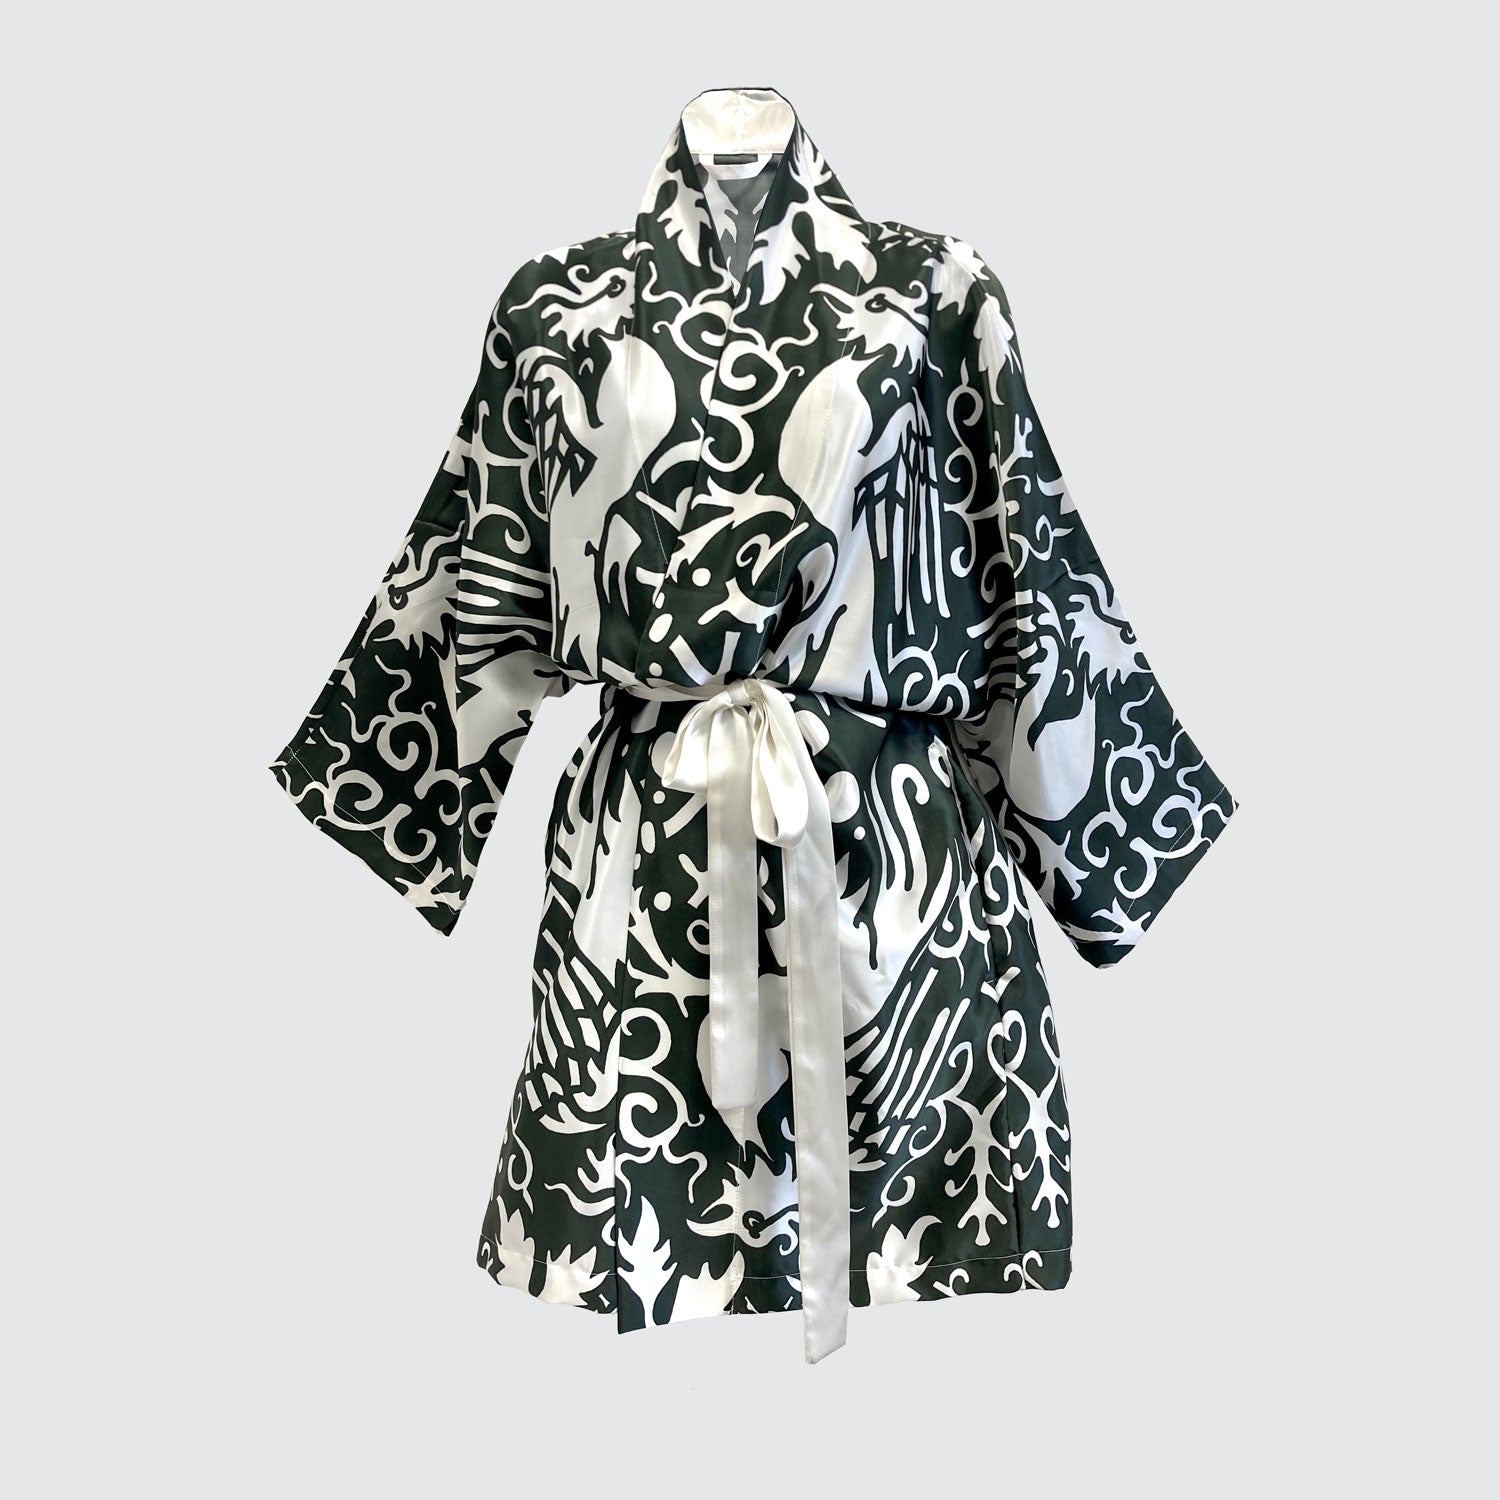 A silk kimono with a white phoenix pattern on a green background.